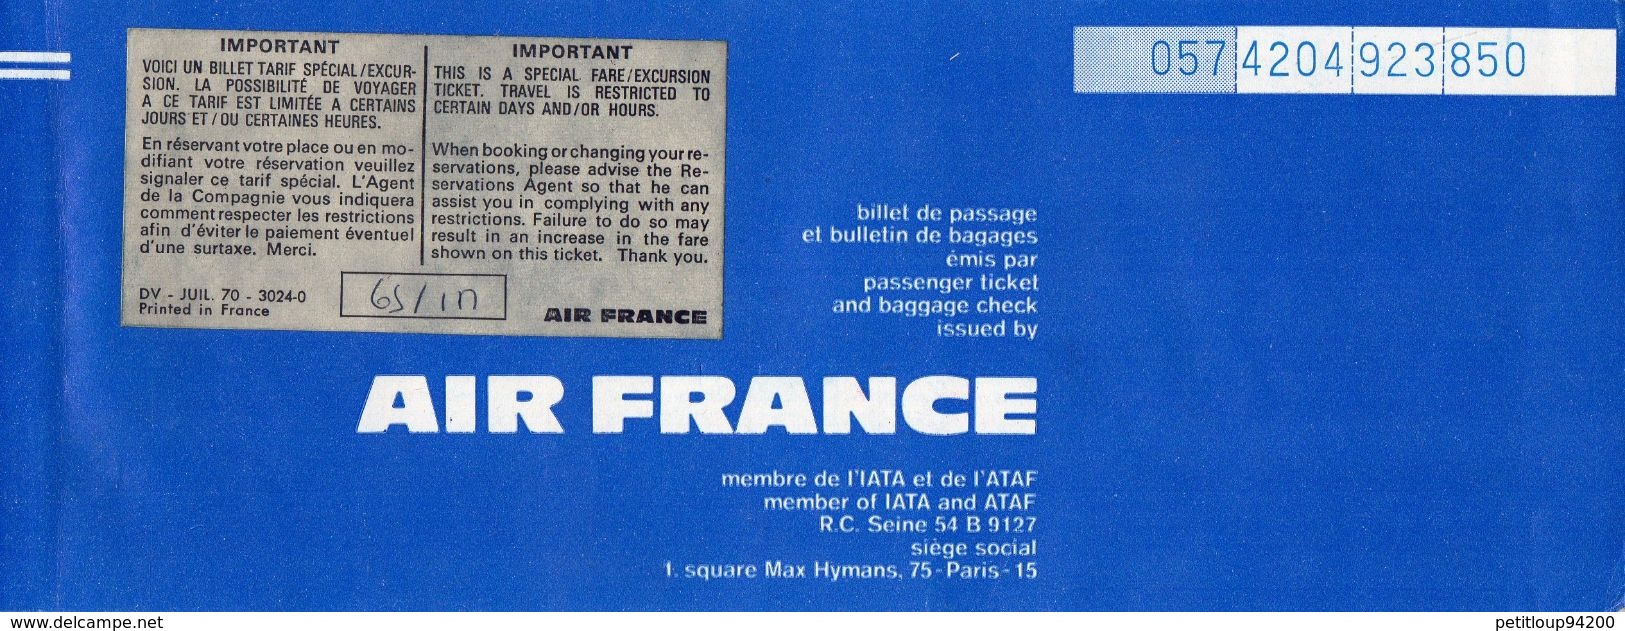 AIR FRANCE Billet De Passage Et Bulletin De Bagages  Passenger Ticket And Baggage Check 1975 - Tickets